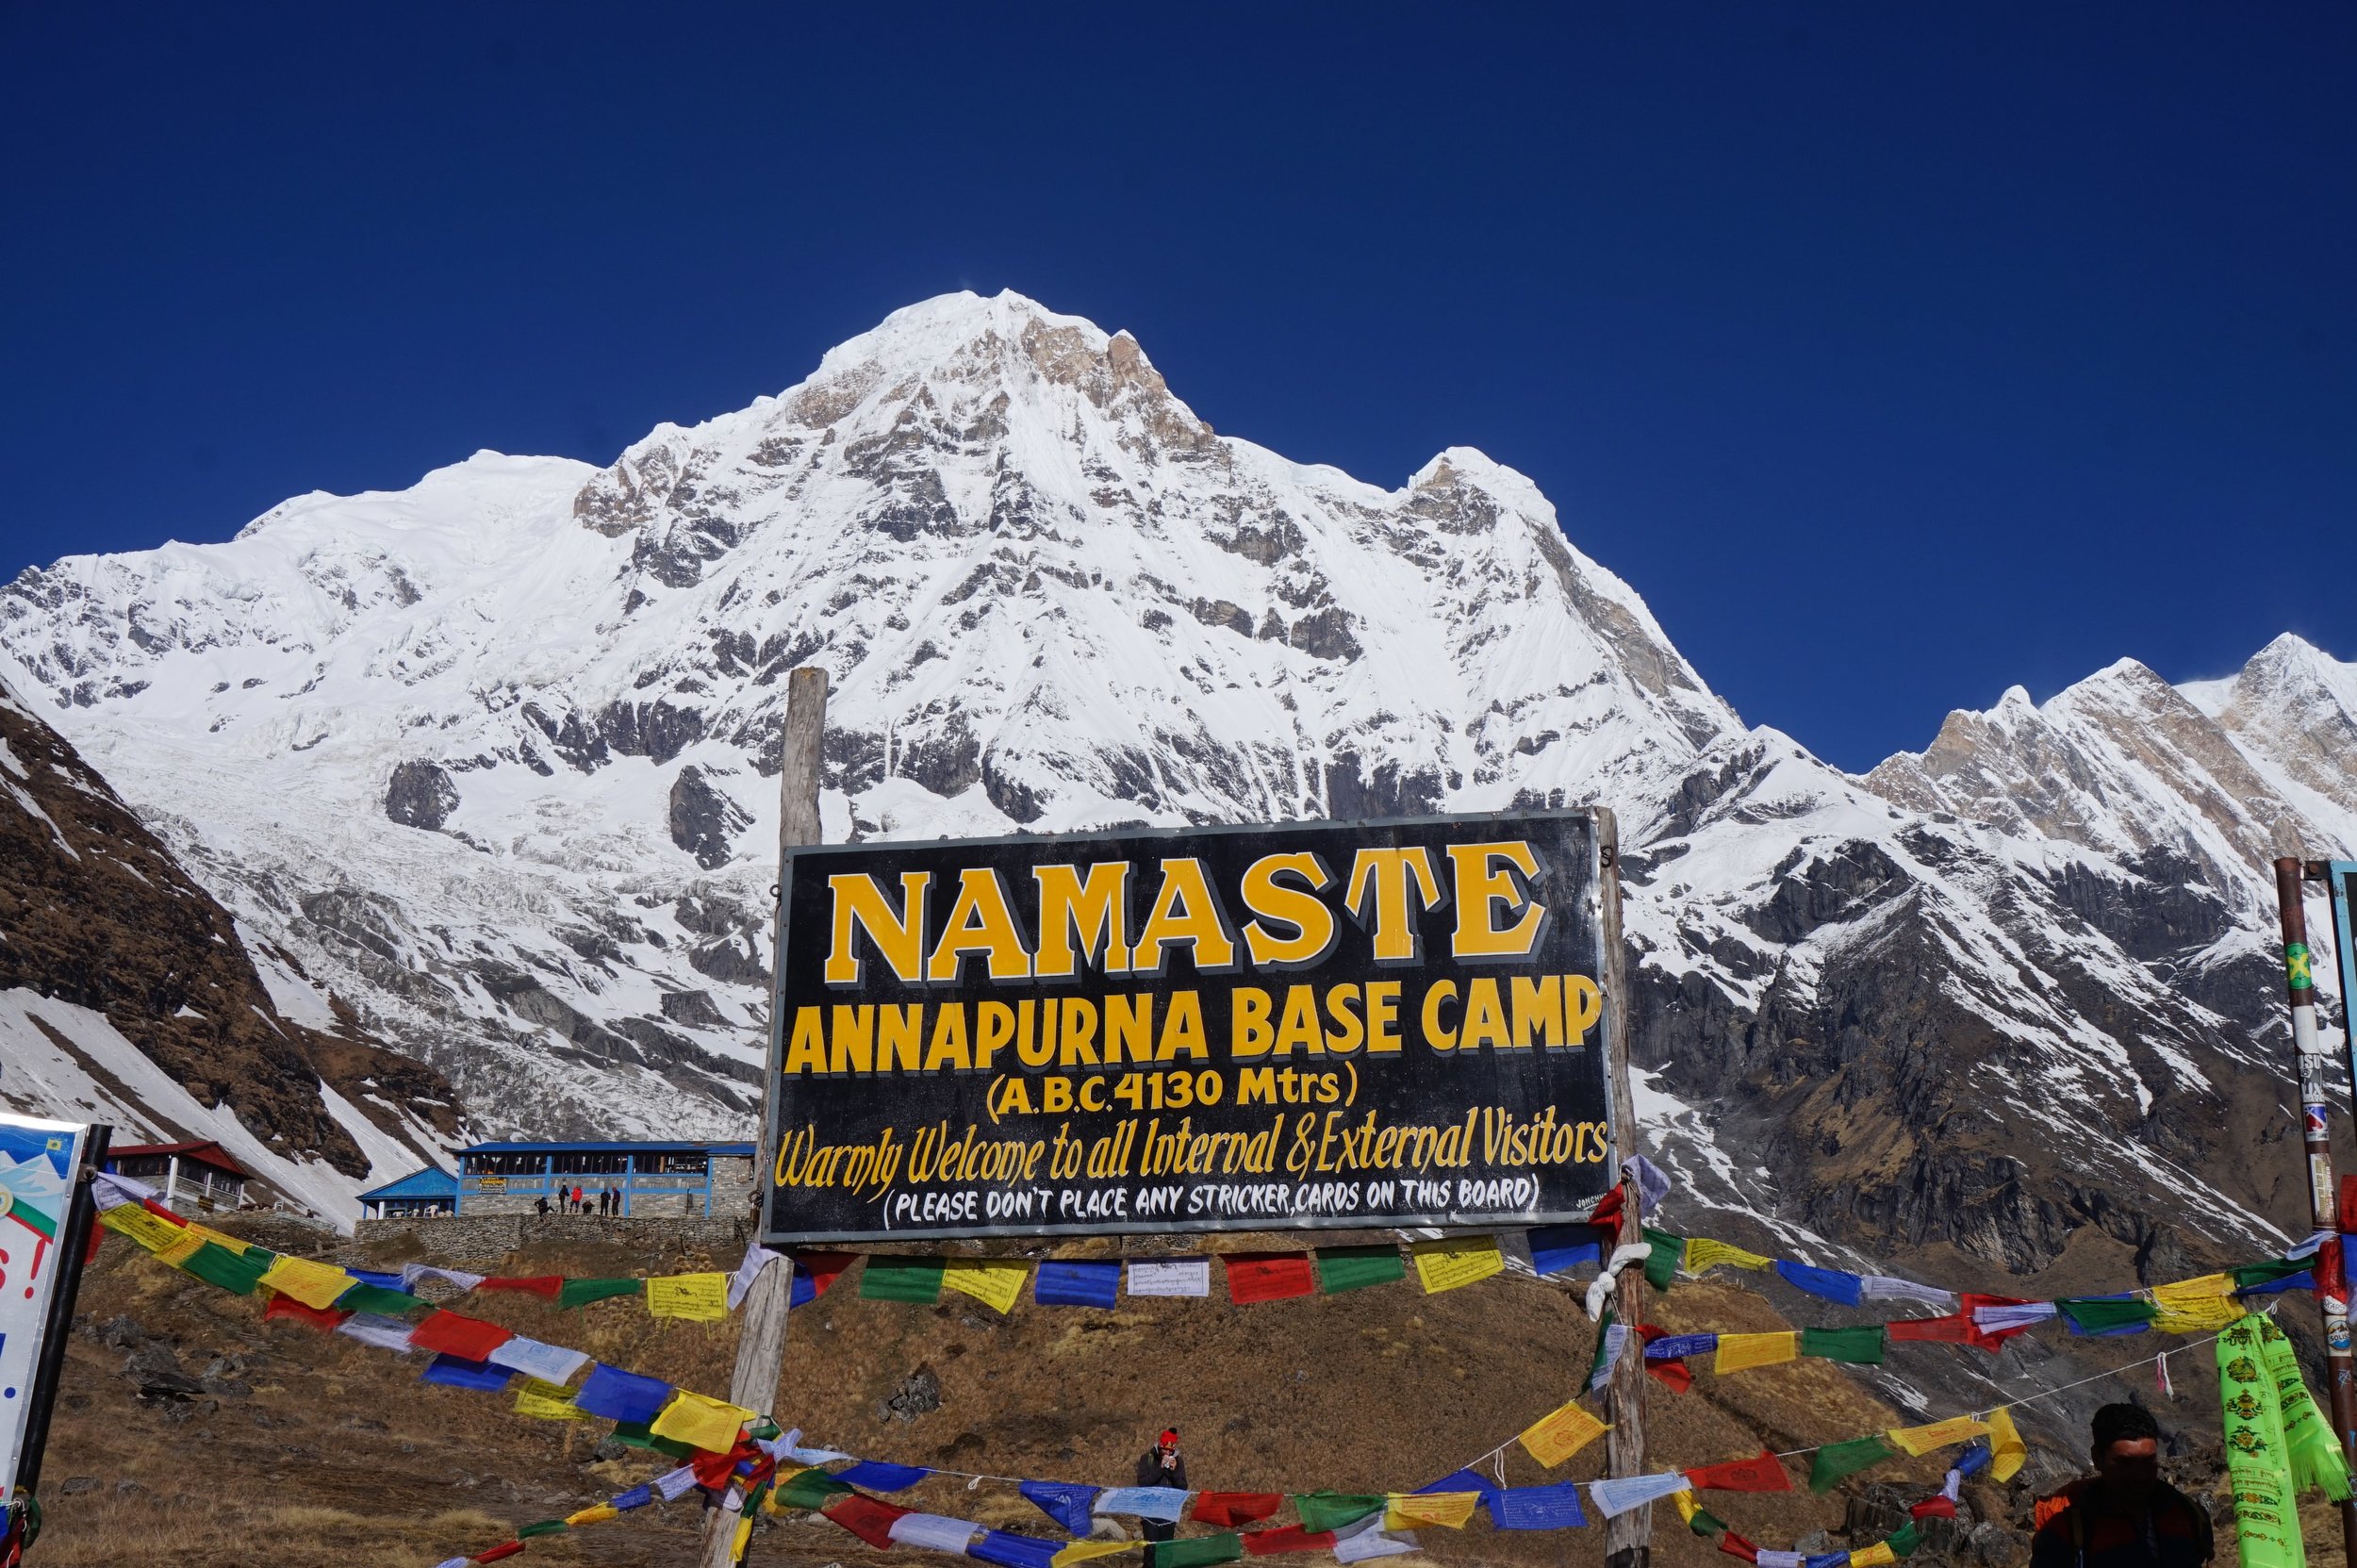 Deurali to Annapurna Base Camp (4,130m/13,545ft) via Machhapuchre Base Camp: 5-6 hrs trek